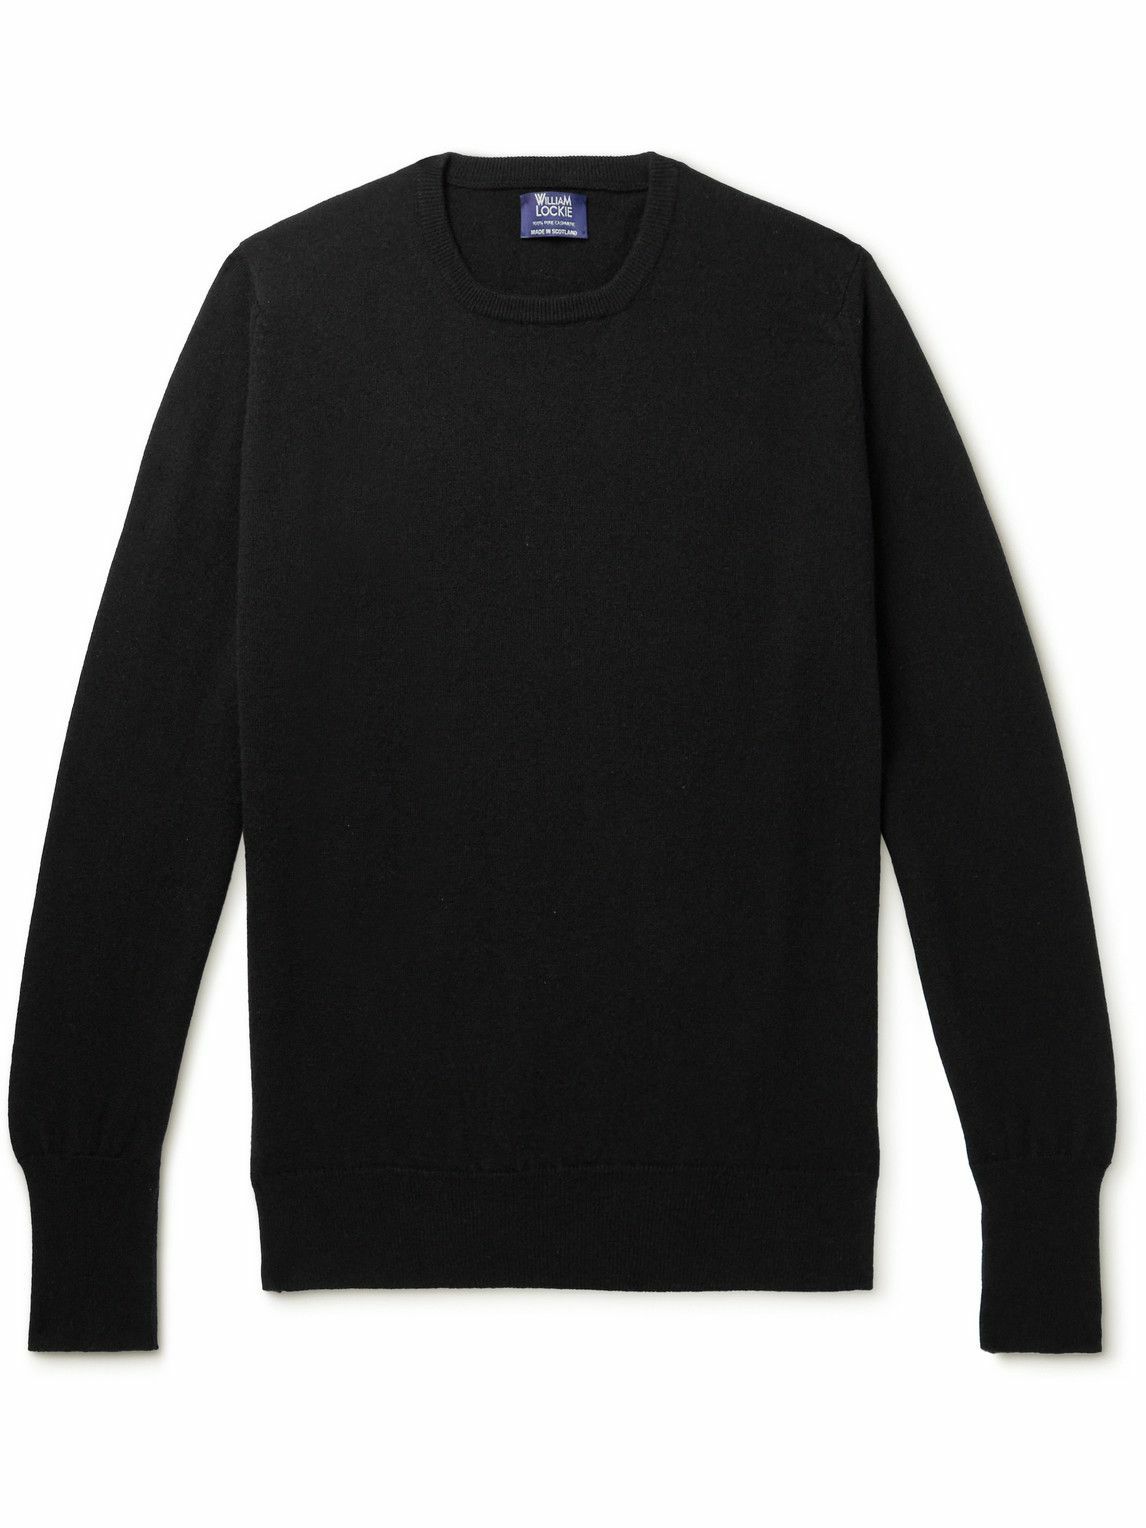 Photo: William Lockie - Oxton Cashmere Sweater - Black